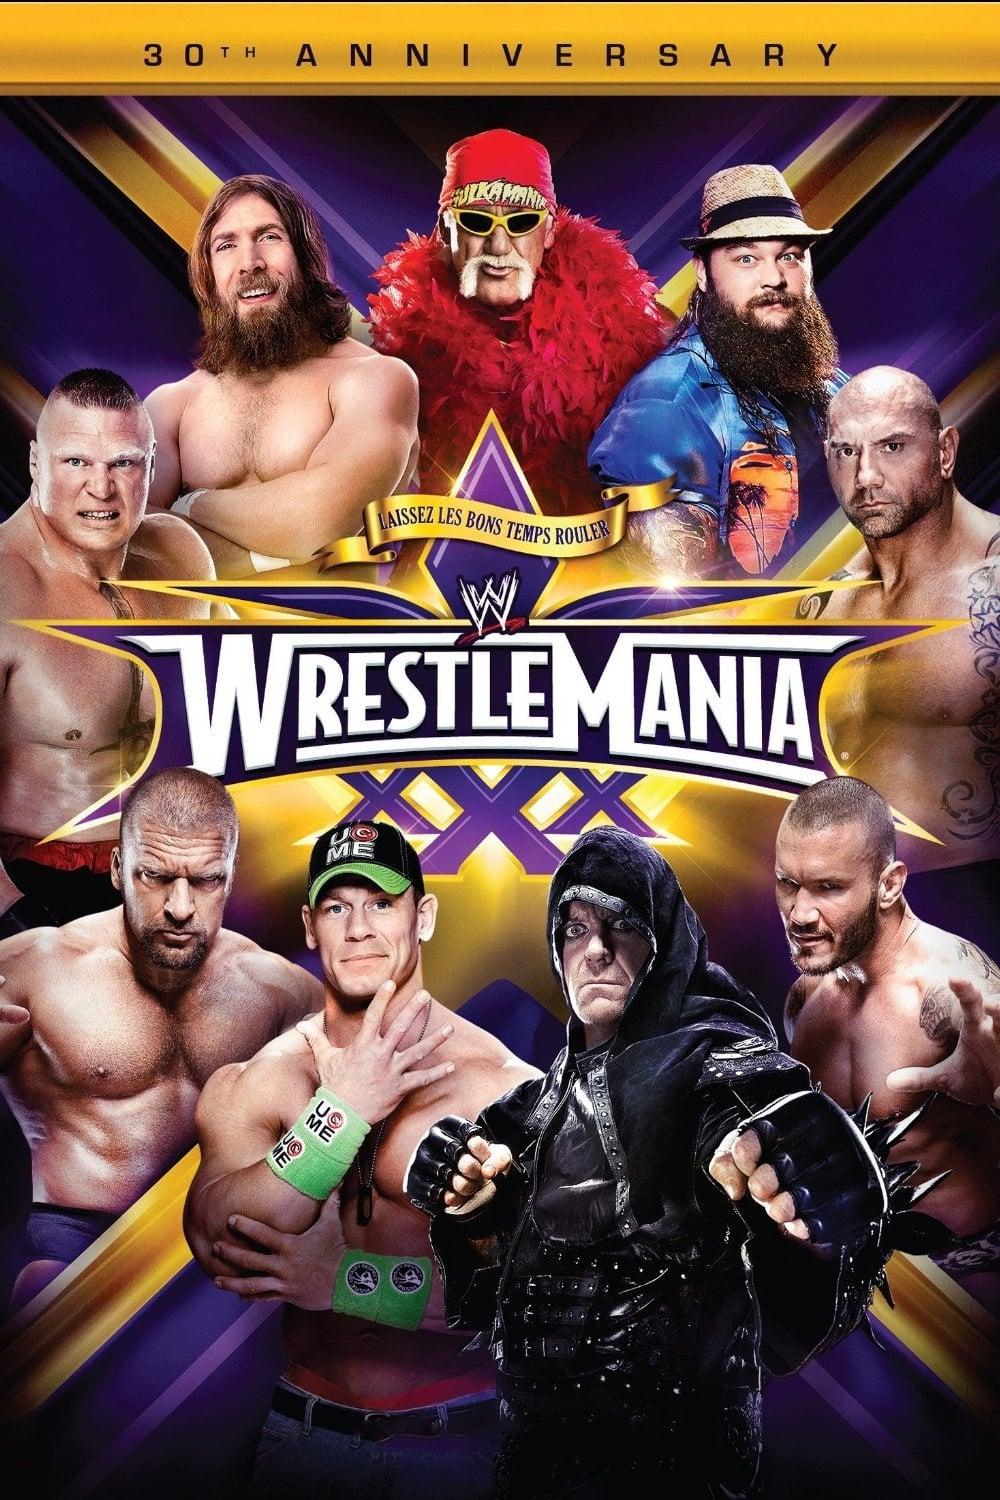 WWE WrestleMania XXX poster